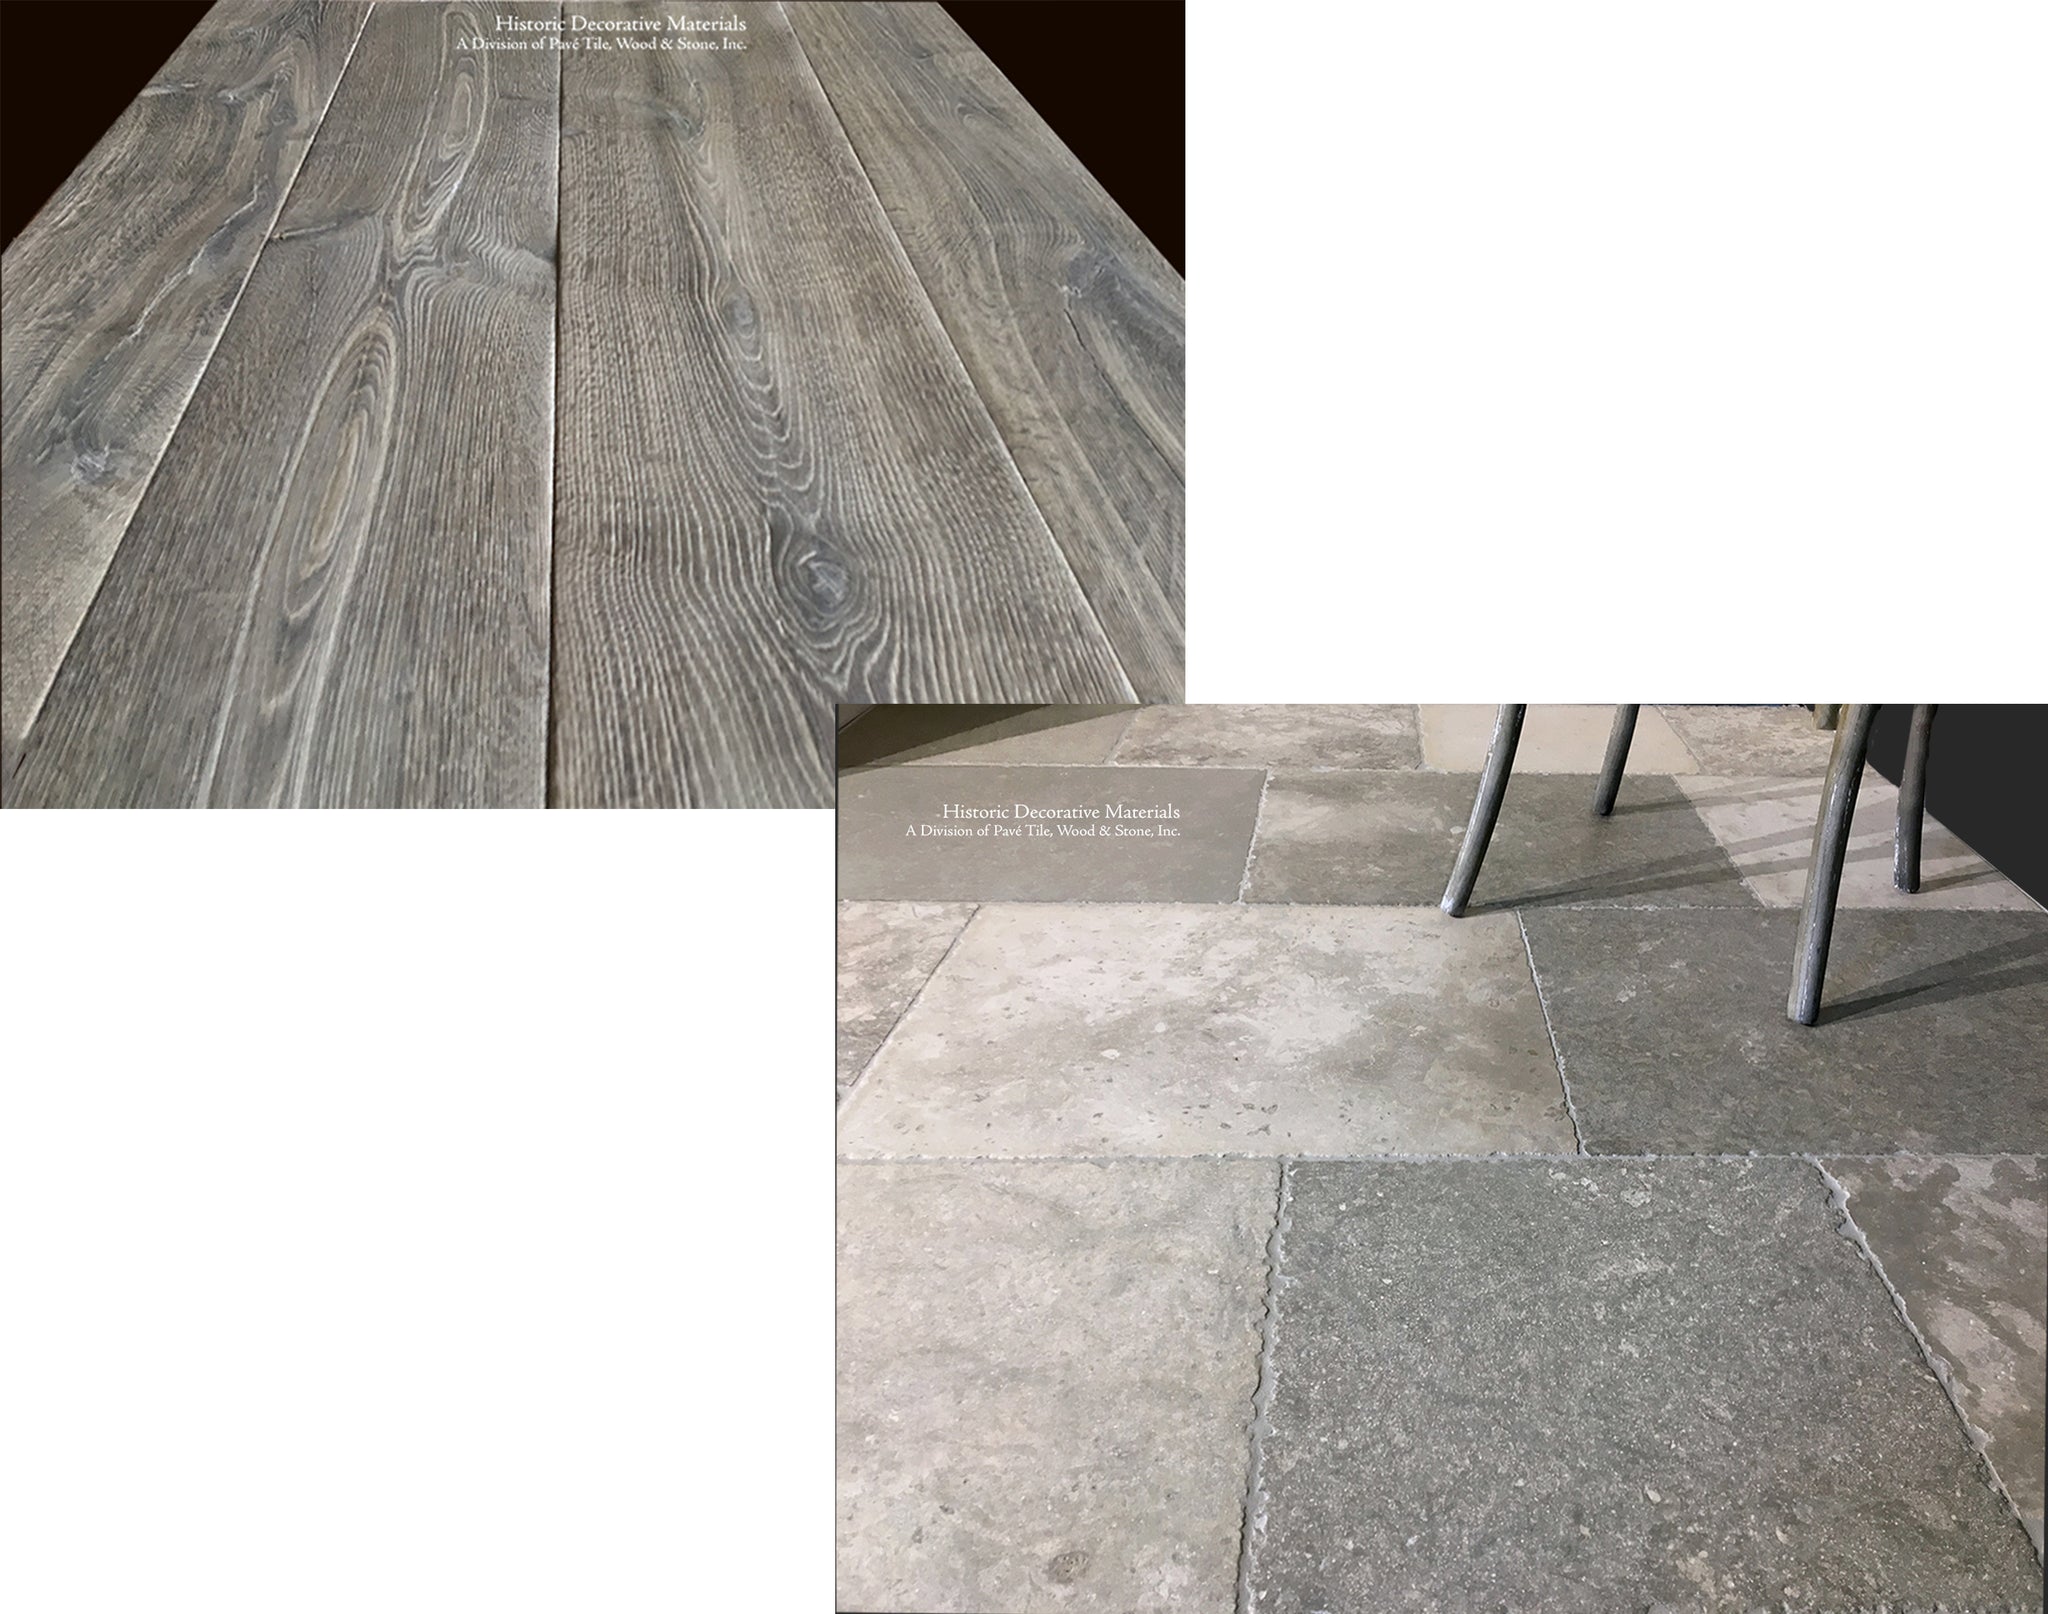 French Oak Flooring and French Limestone Flooring